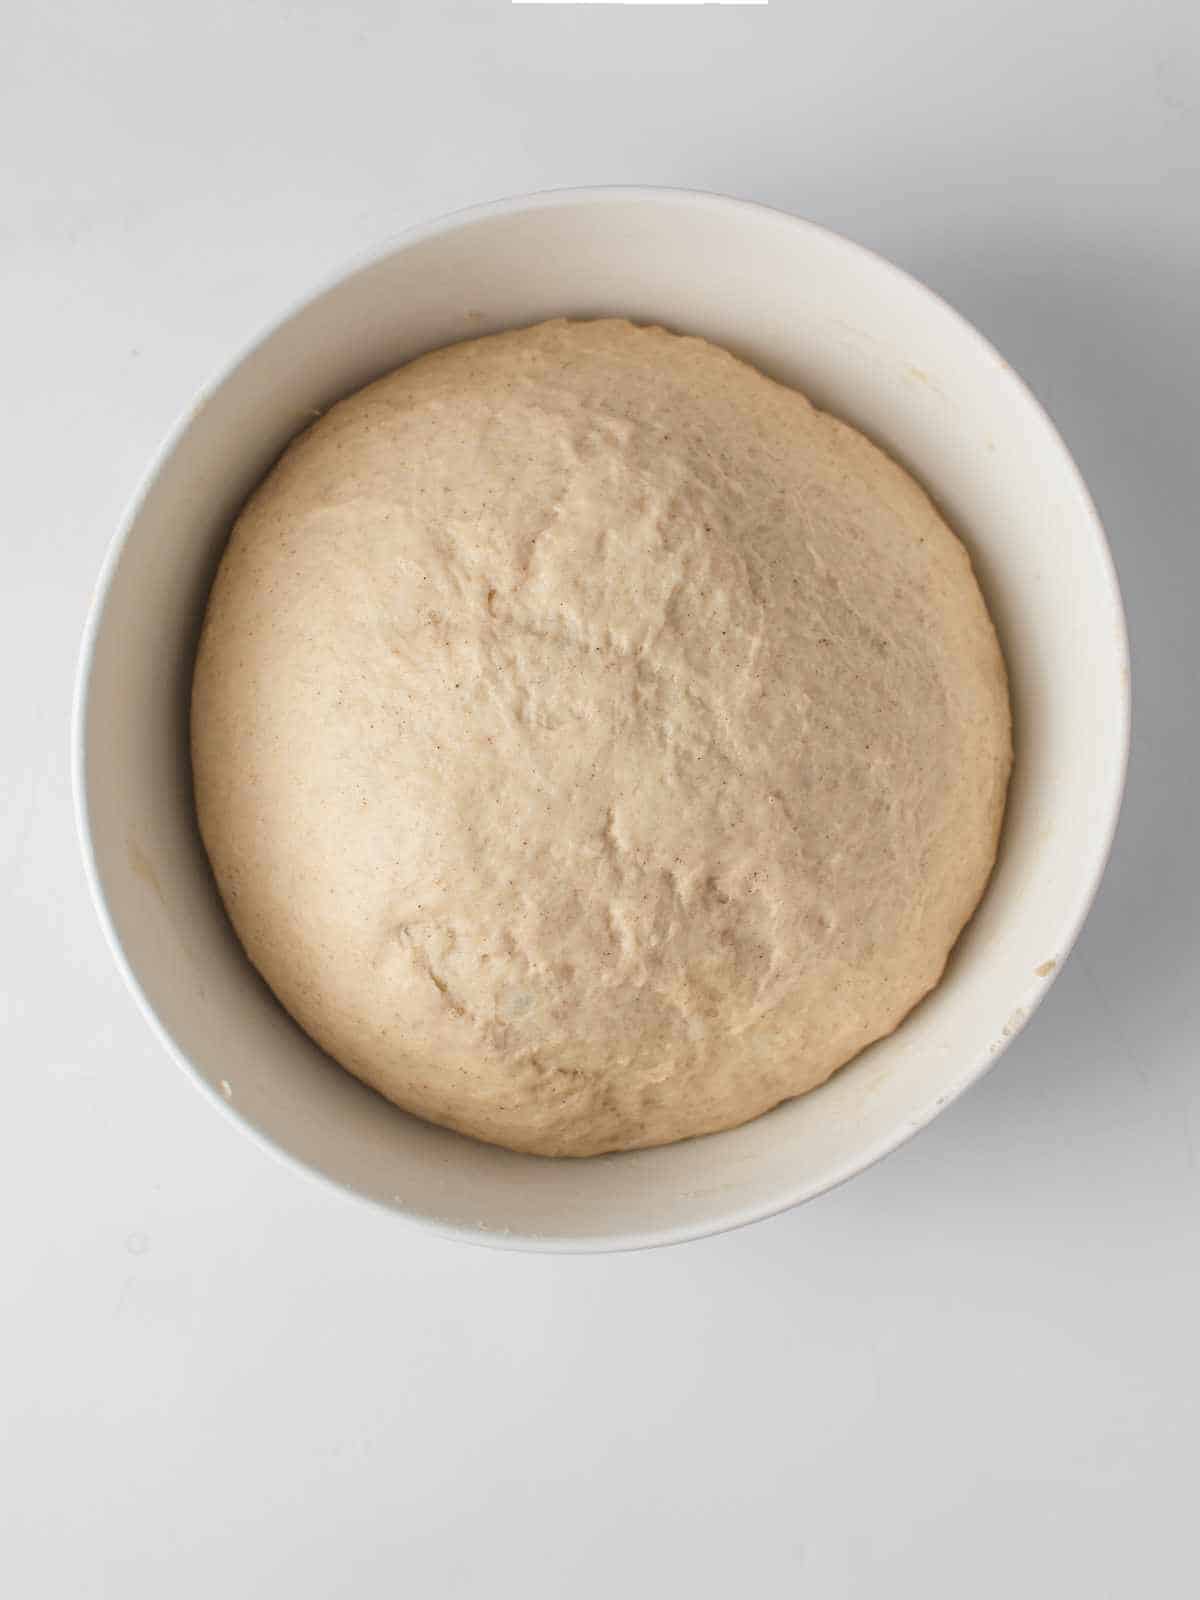 bulk rising dough in a bowl.